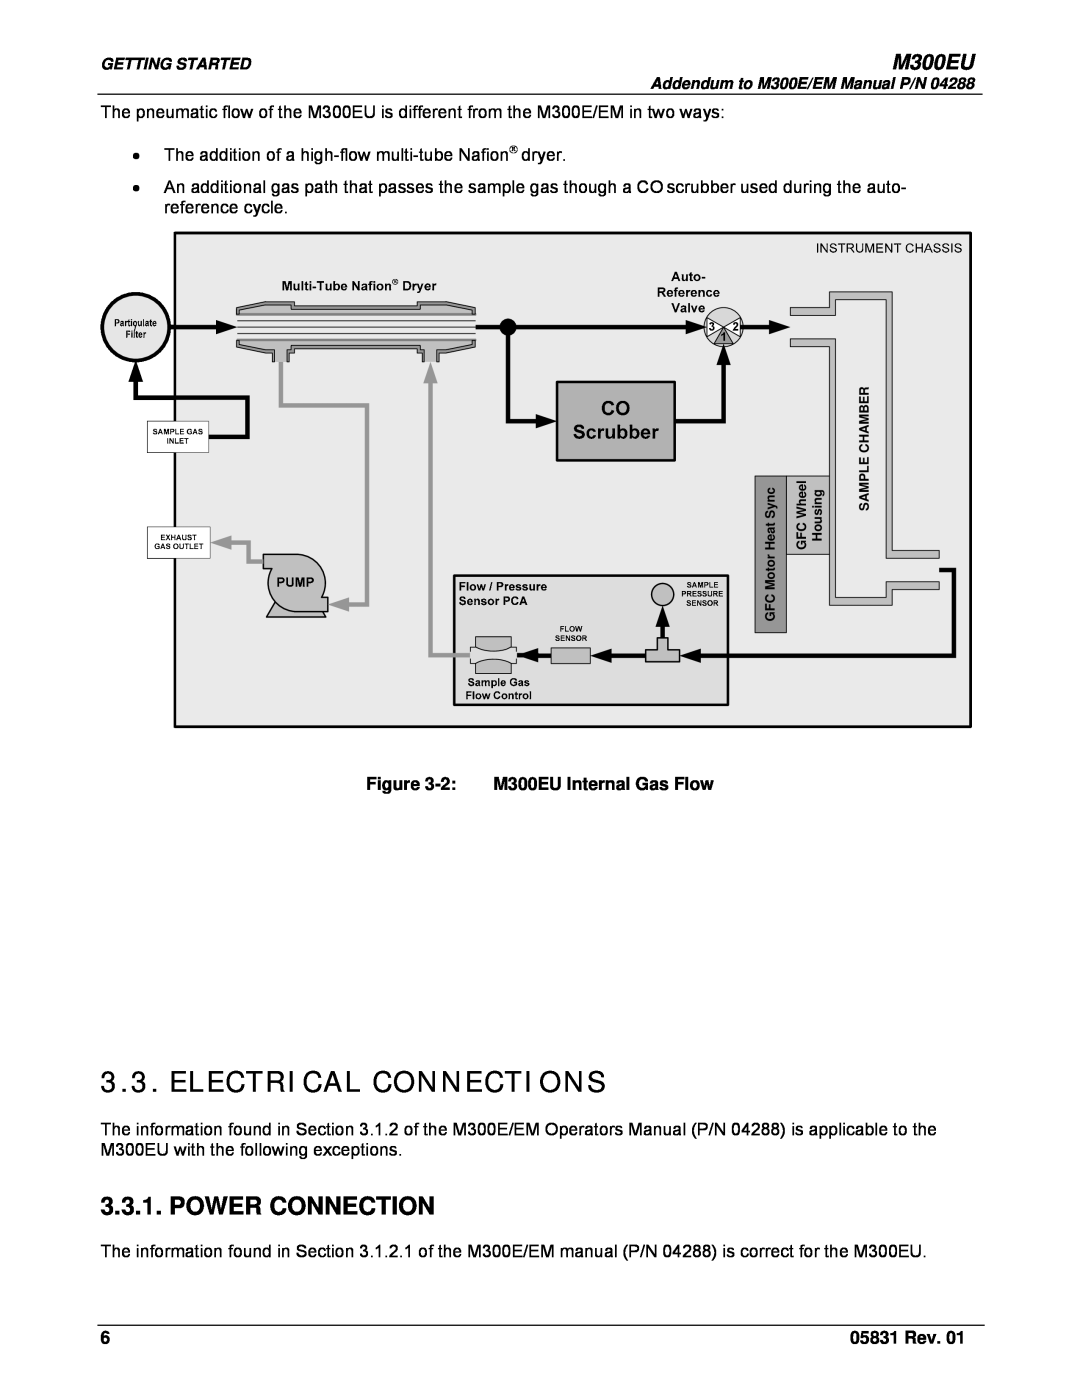 Teledyne Model 300EU manual Electrical Connections, Power Connection, 2 M300EU Internal Gas Flow, 05831 Rev 